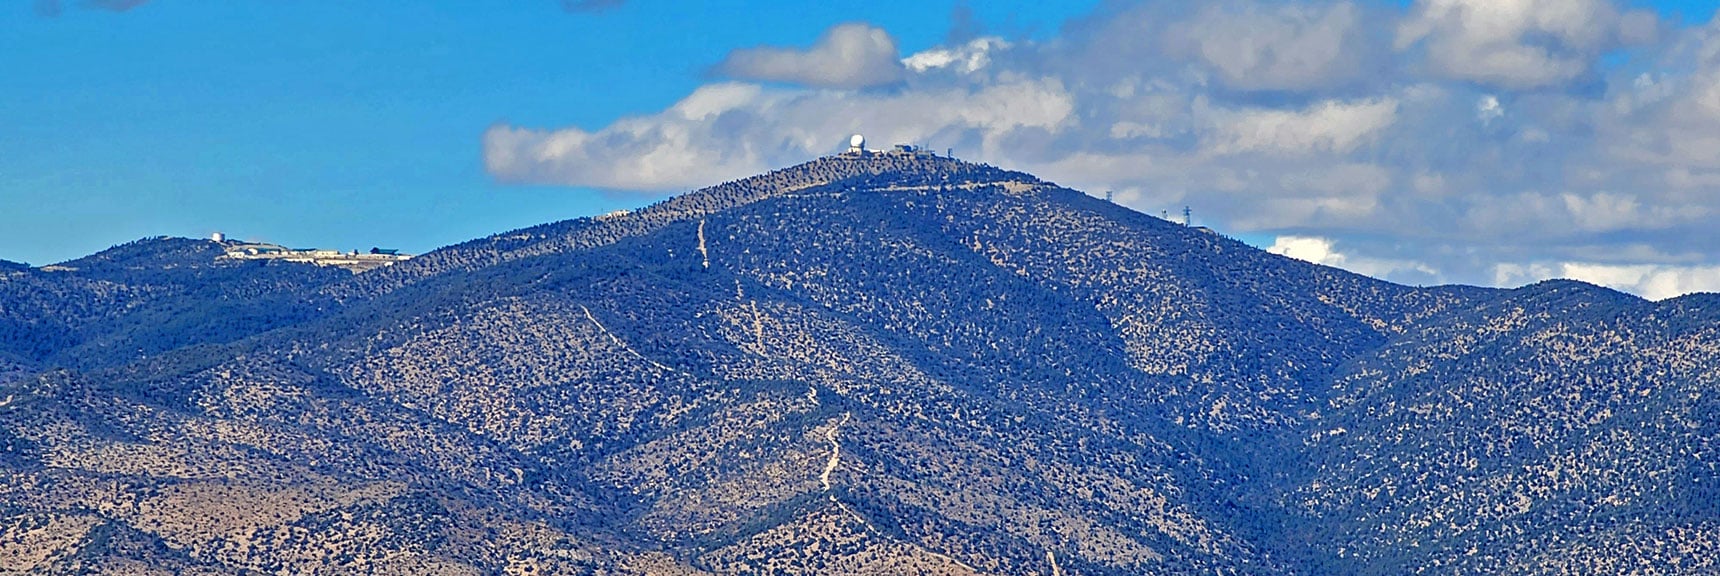 Angel Peak from Keystone Thrust Summit | Keystone Thrust West Summit Above White Rock Mountain | La Madre Mountains Wilderness, Nevada